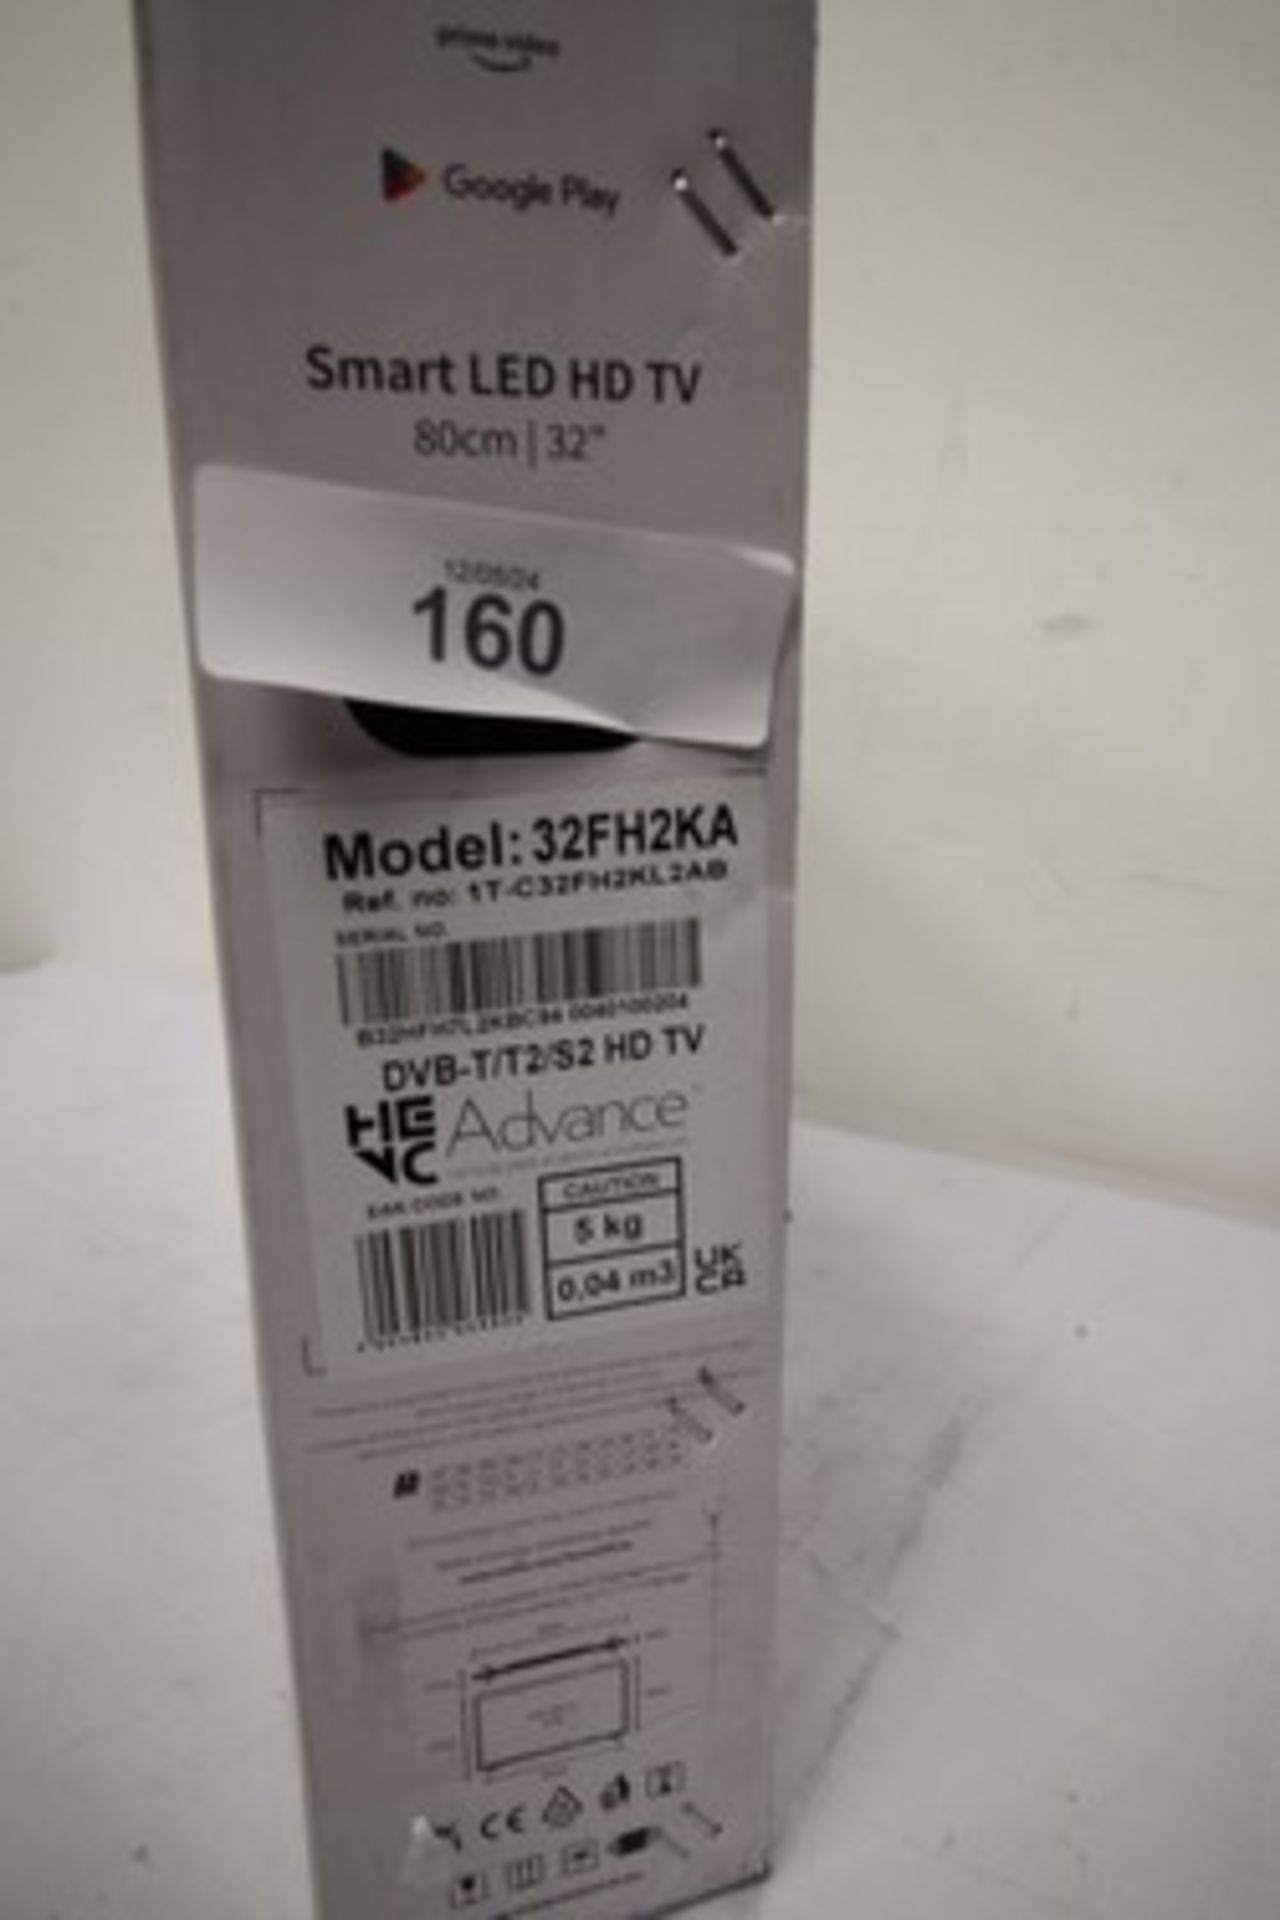 1 x Sharp 32" android TV, Model 32FH2KA - New (ES2) - Image 2 of 2